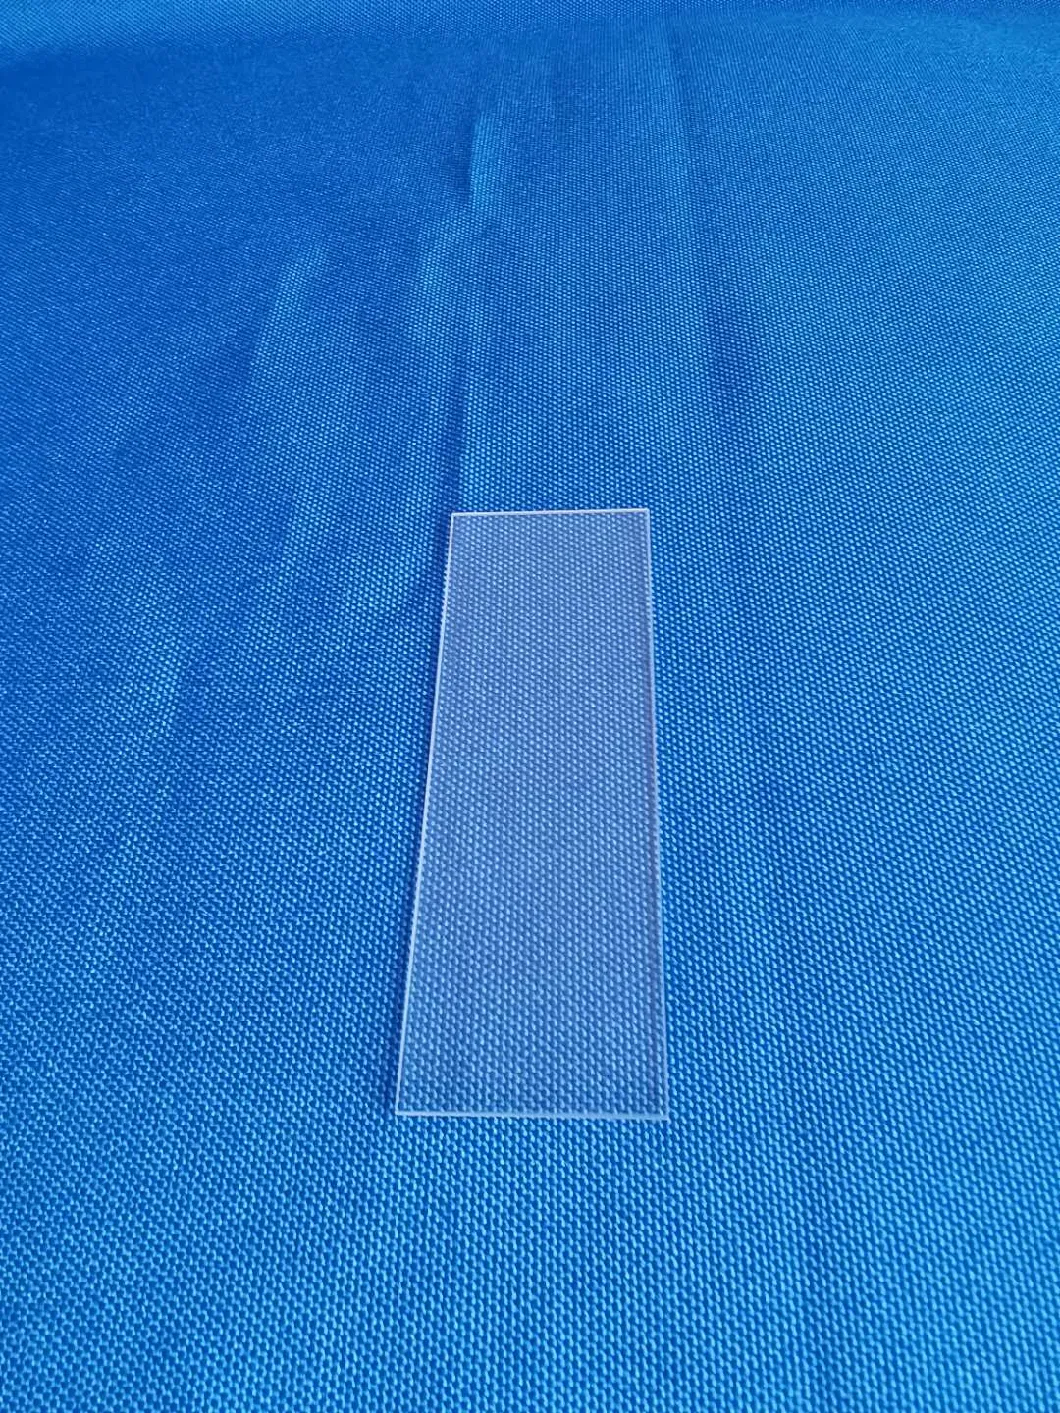 High Quality Quartz Glass Plate/Sheet/Window/Plain Silica Fused